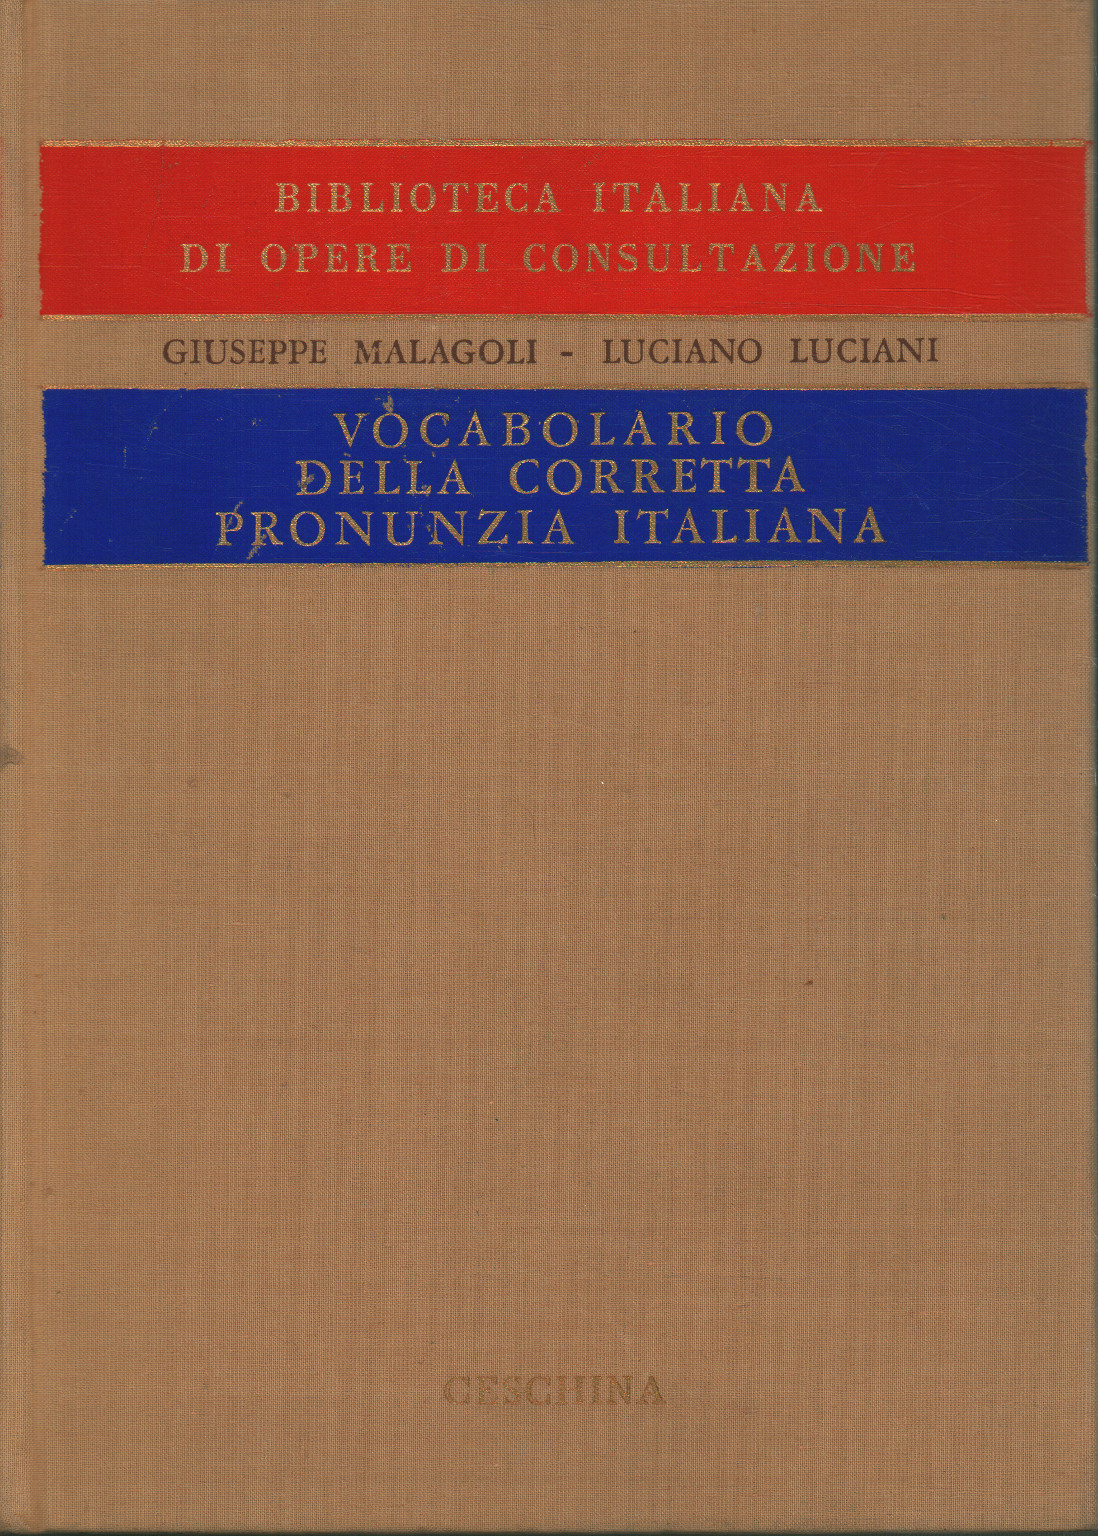 Books - Encyclopedias - Dictionaries, Vocabulary of correct Italian pronunciation